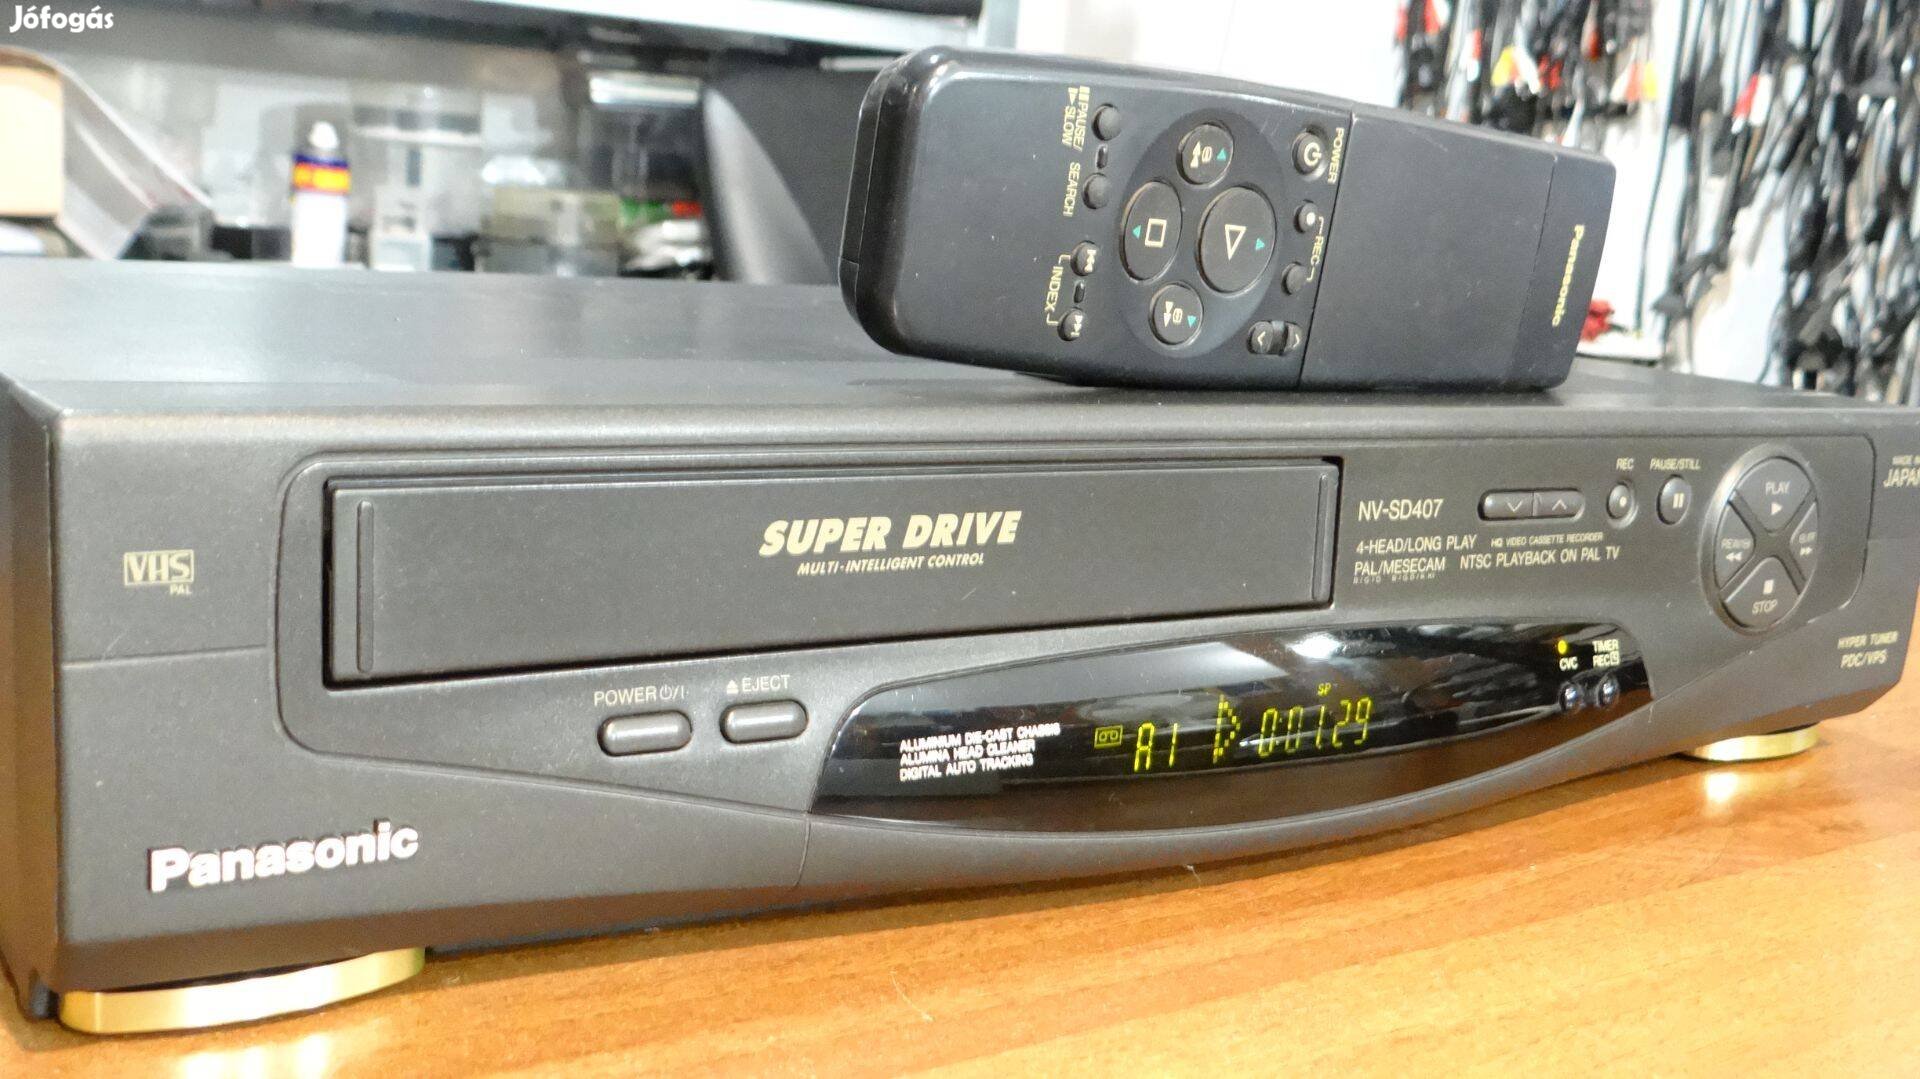 Panasonic NV-SD407 VHS Recorder